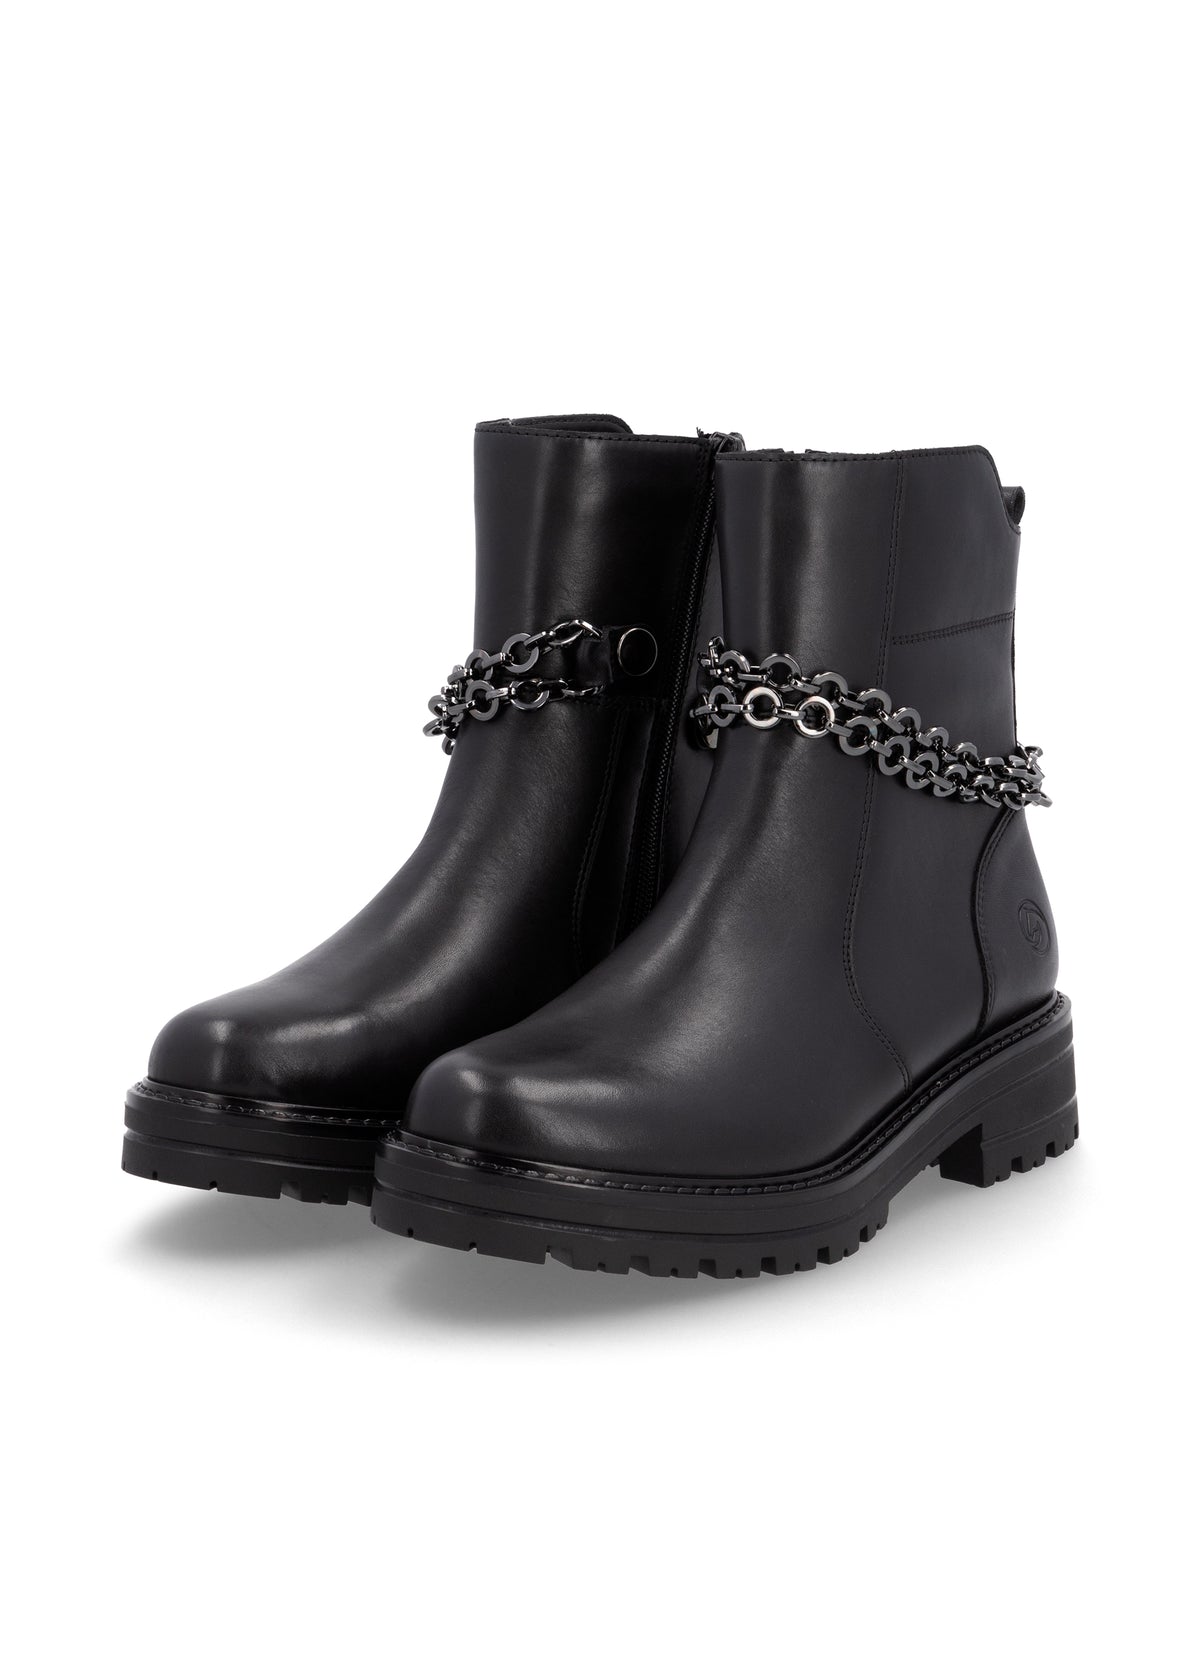 Ankle boots - black, decorative chain